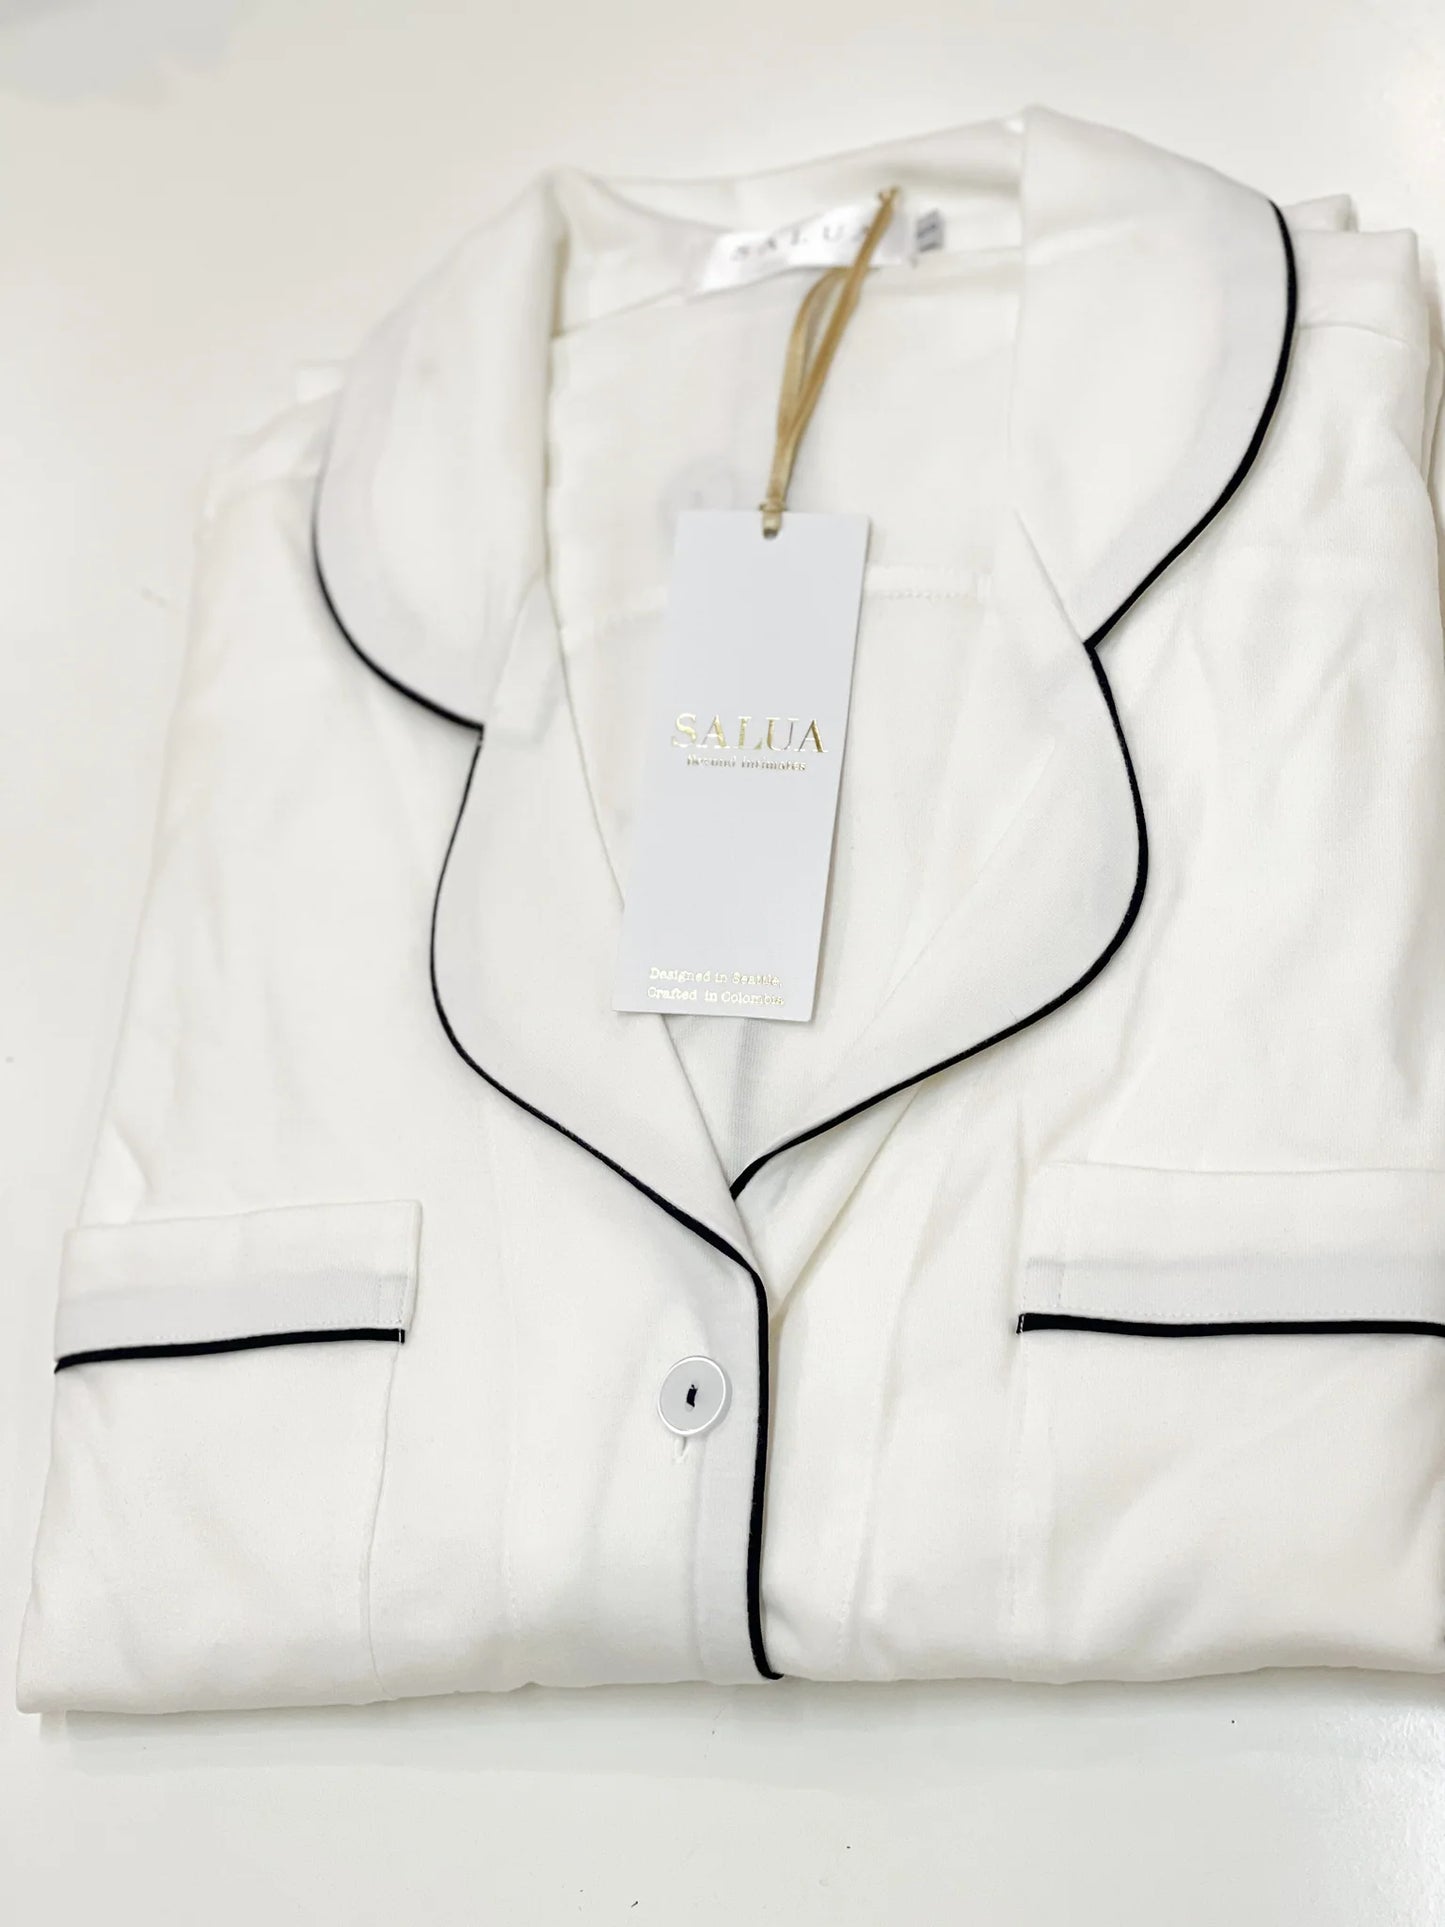 Salua - Sleep Shirt in Brushed Pima Cotton in White w/Navy Details